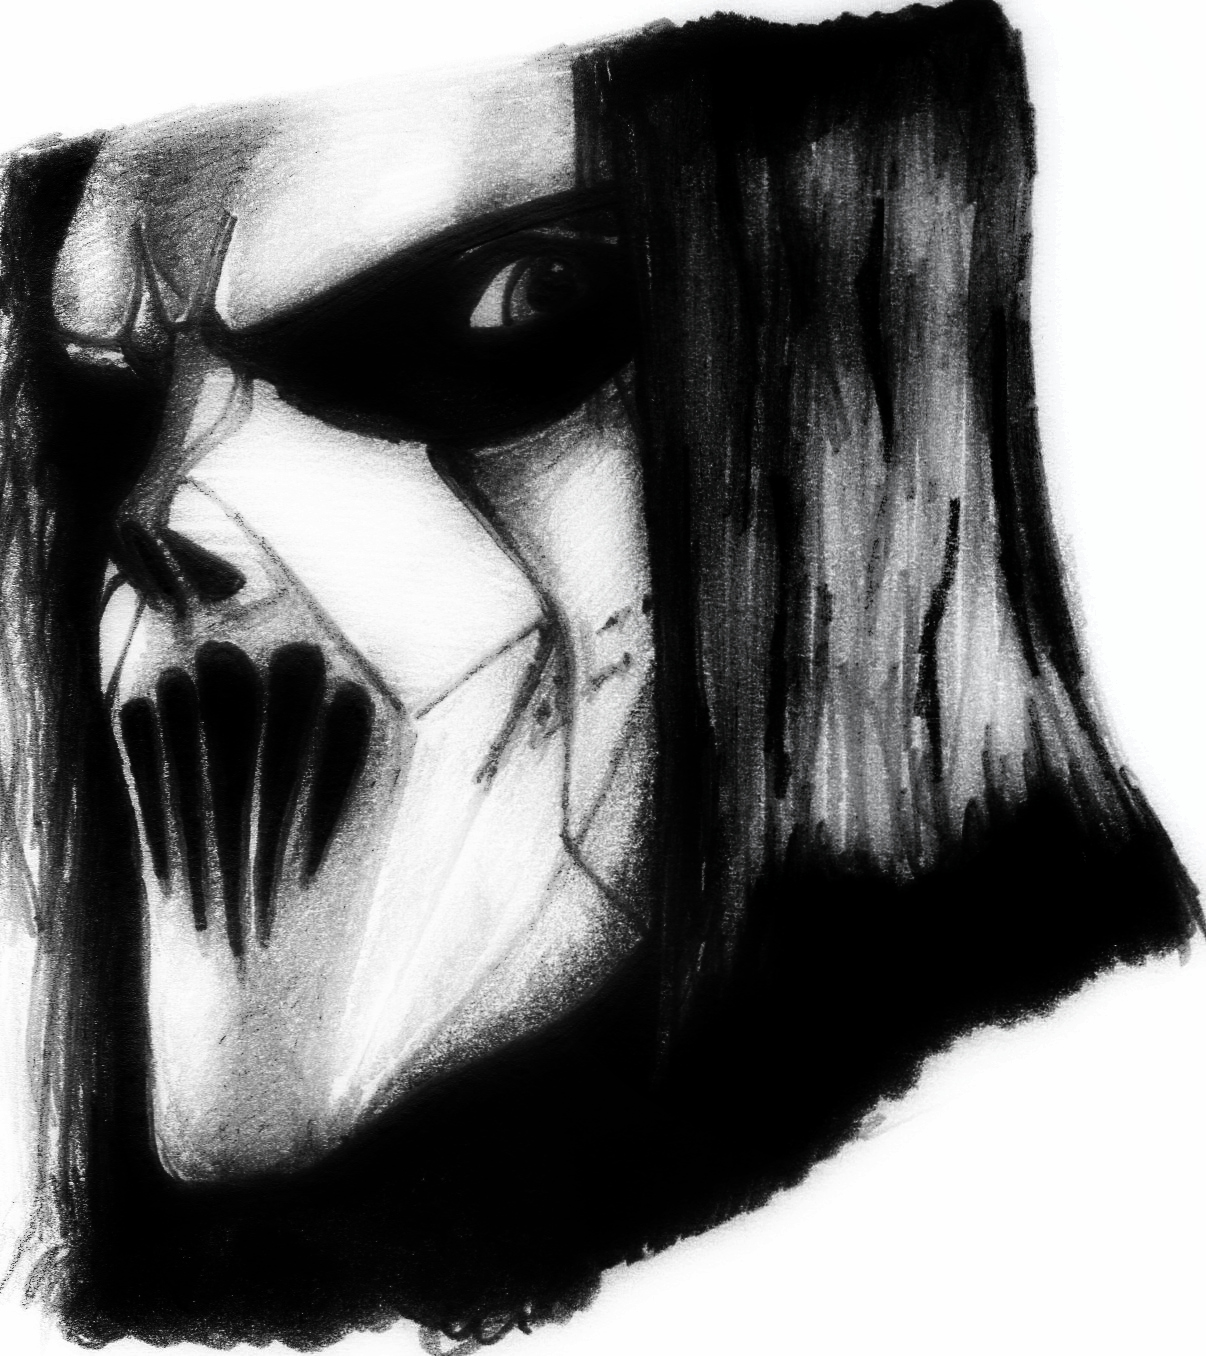 Slipknot - Mick thompson, drawing